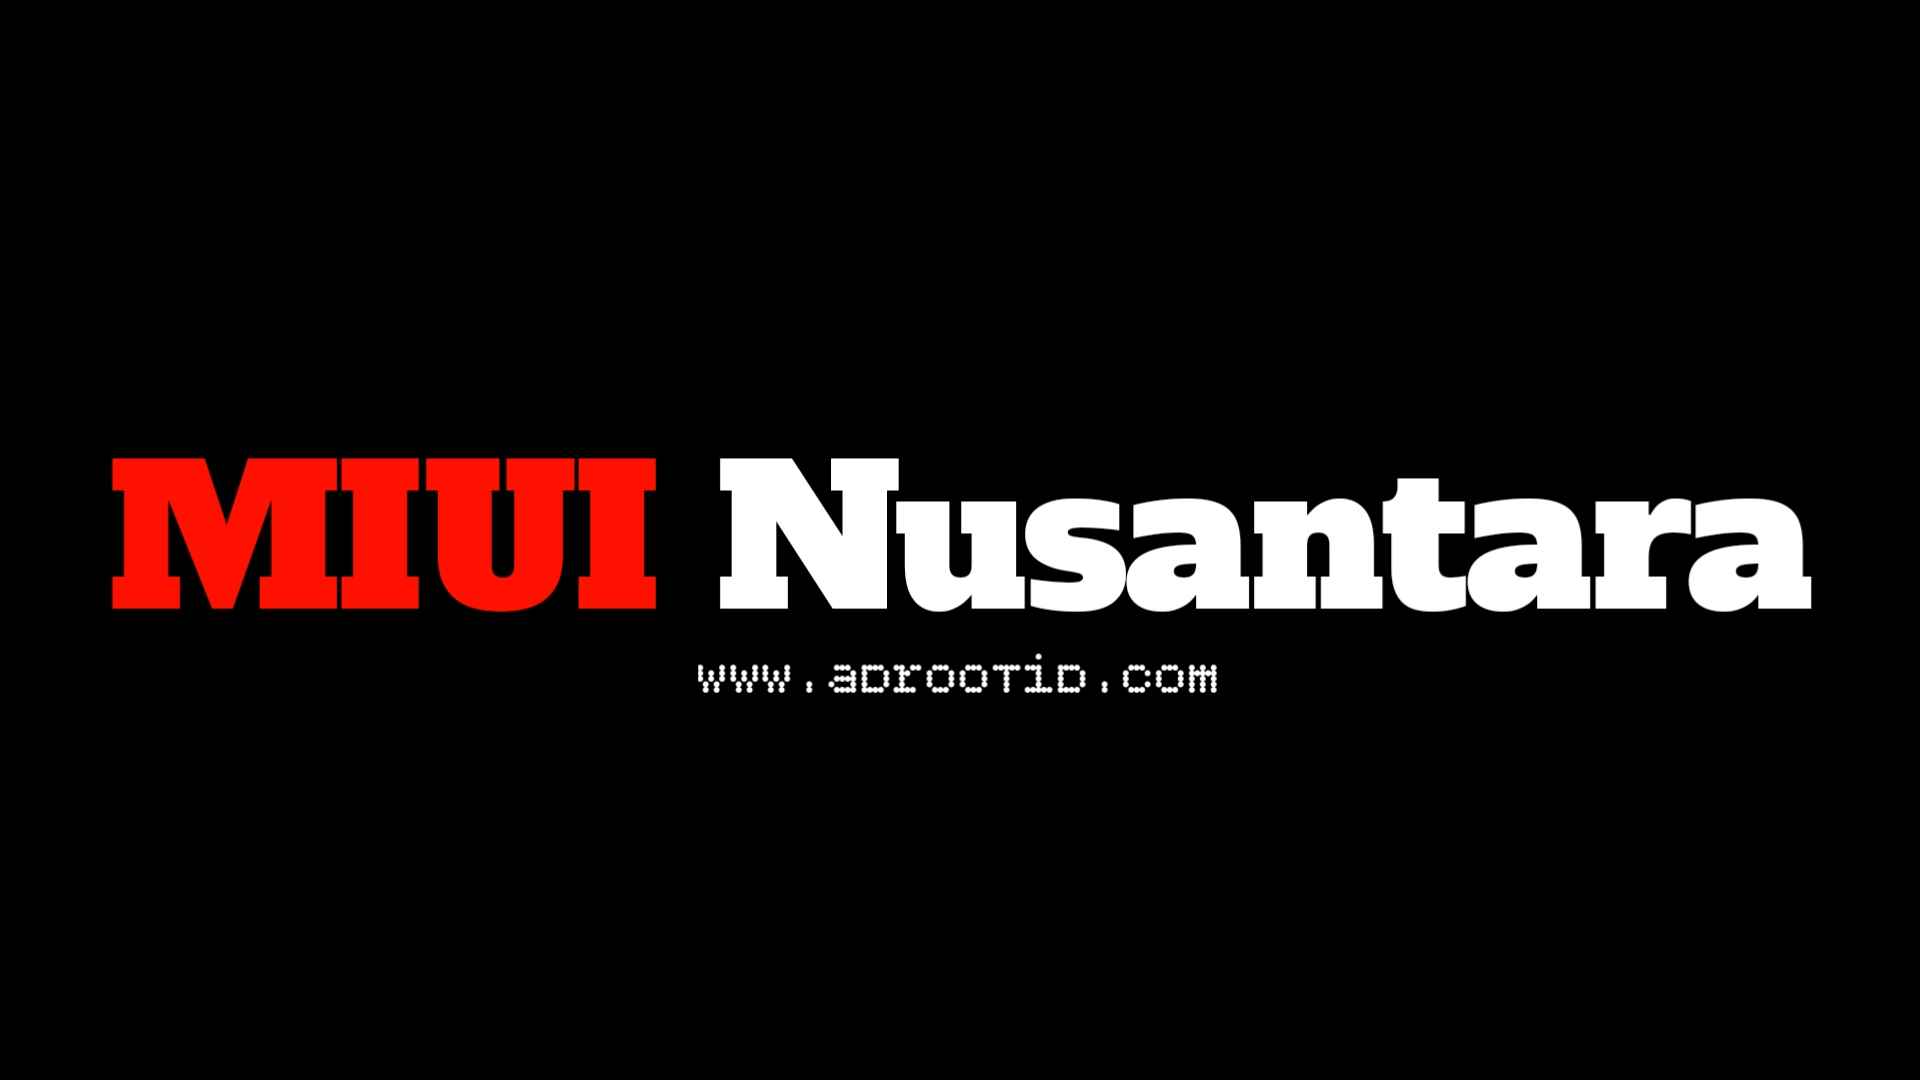 MIUI Nusantara for Redmi 4X | Santoni